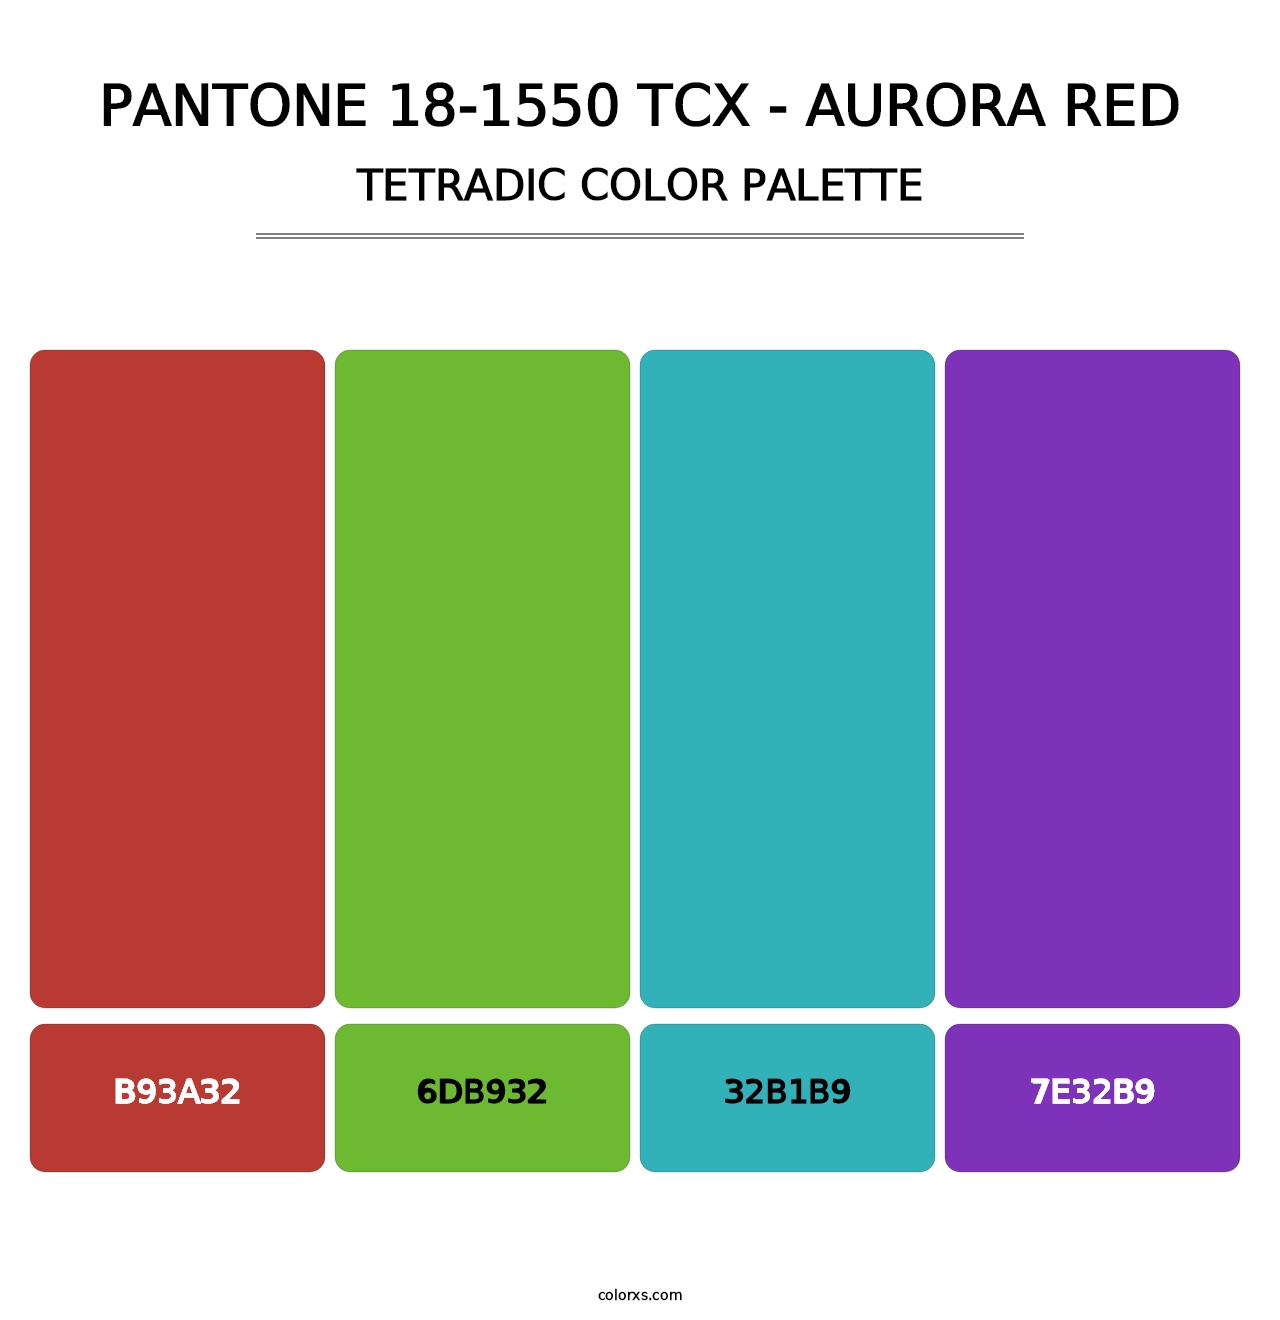 PANTONE 18-1550 TCX - Aurora Red - Tetradic Color Palette